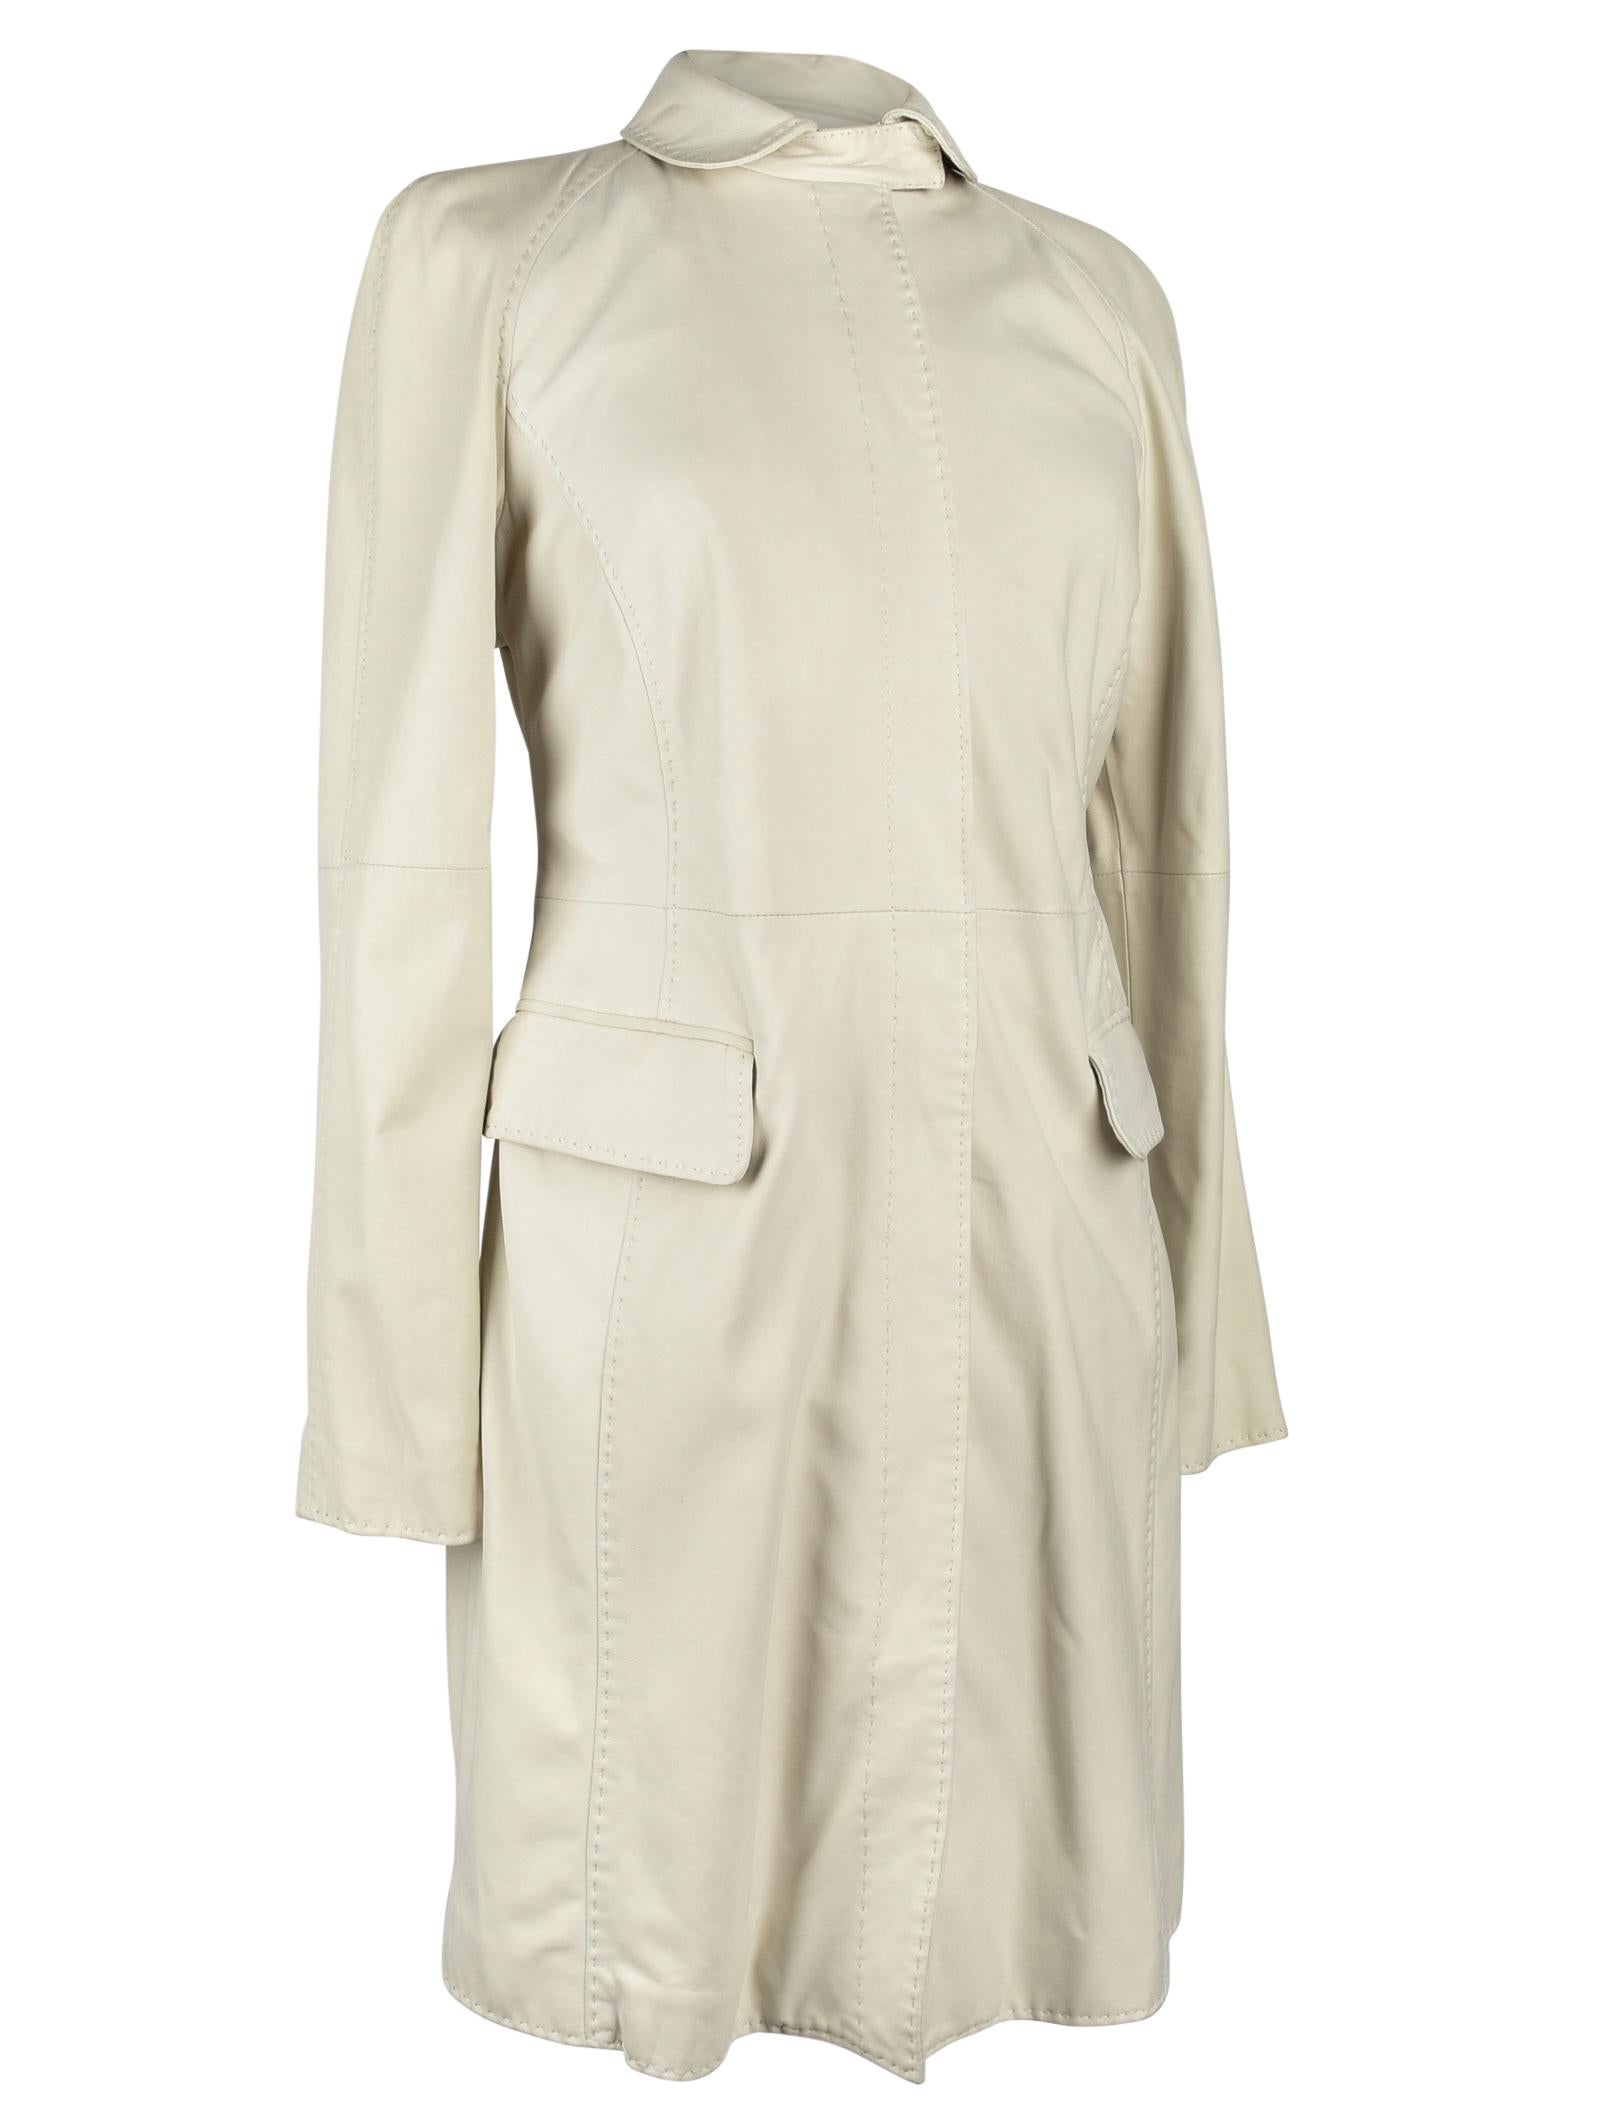 Women's or Men's Giorgio Armani Coat Lambskin Leather Winter White 38 / 6 NWT